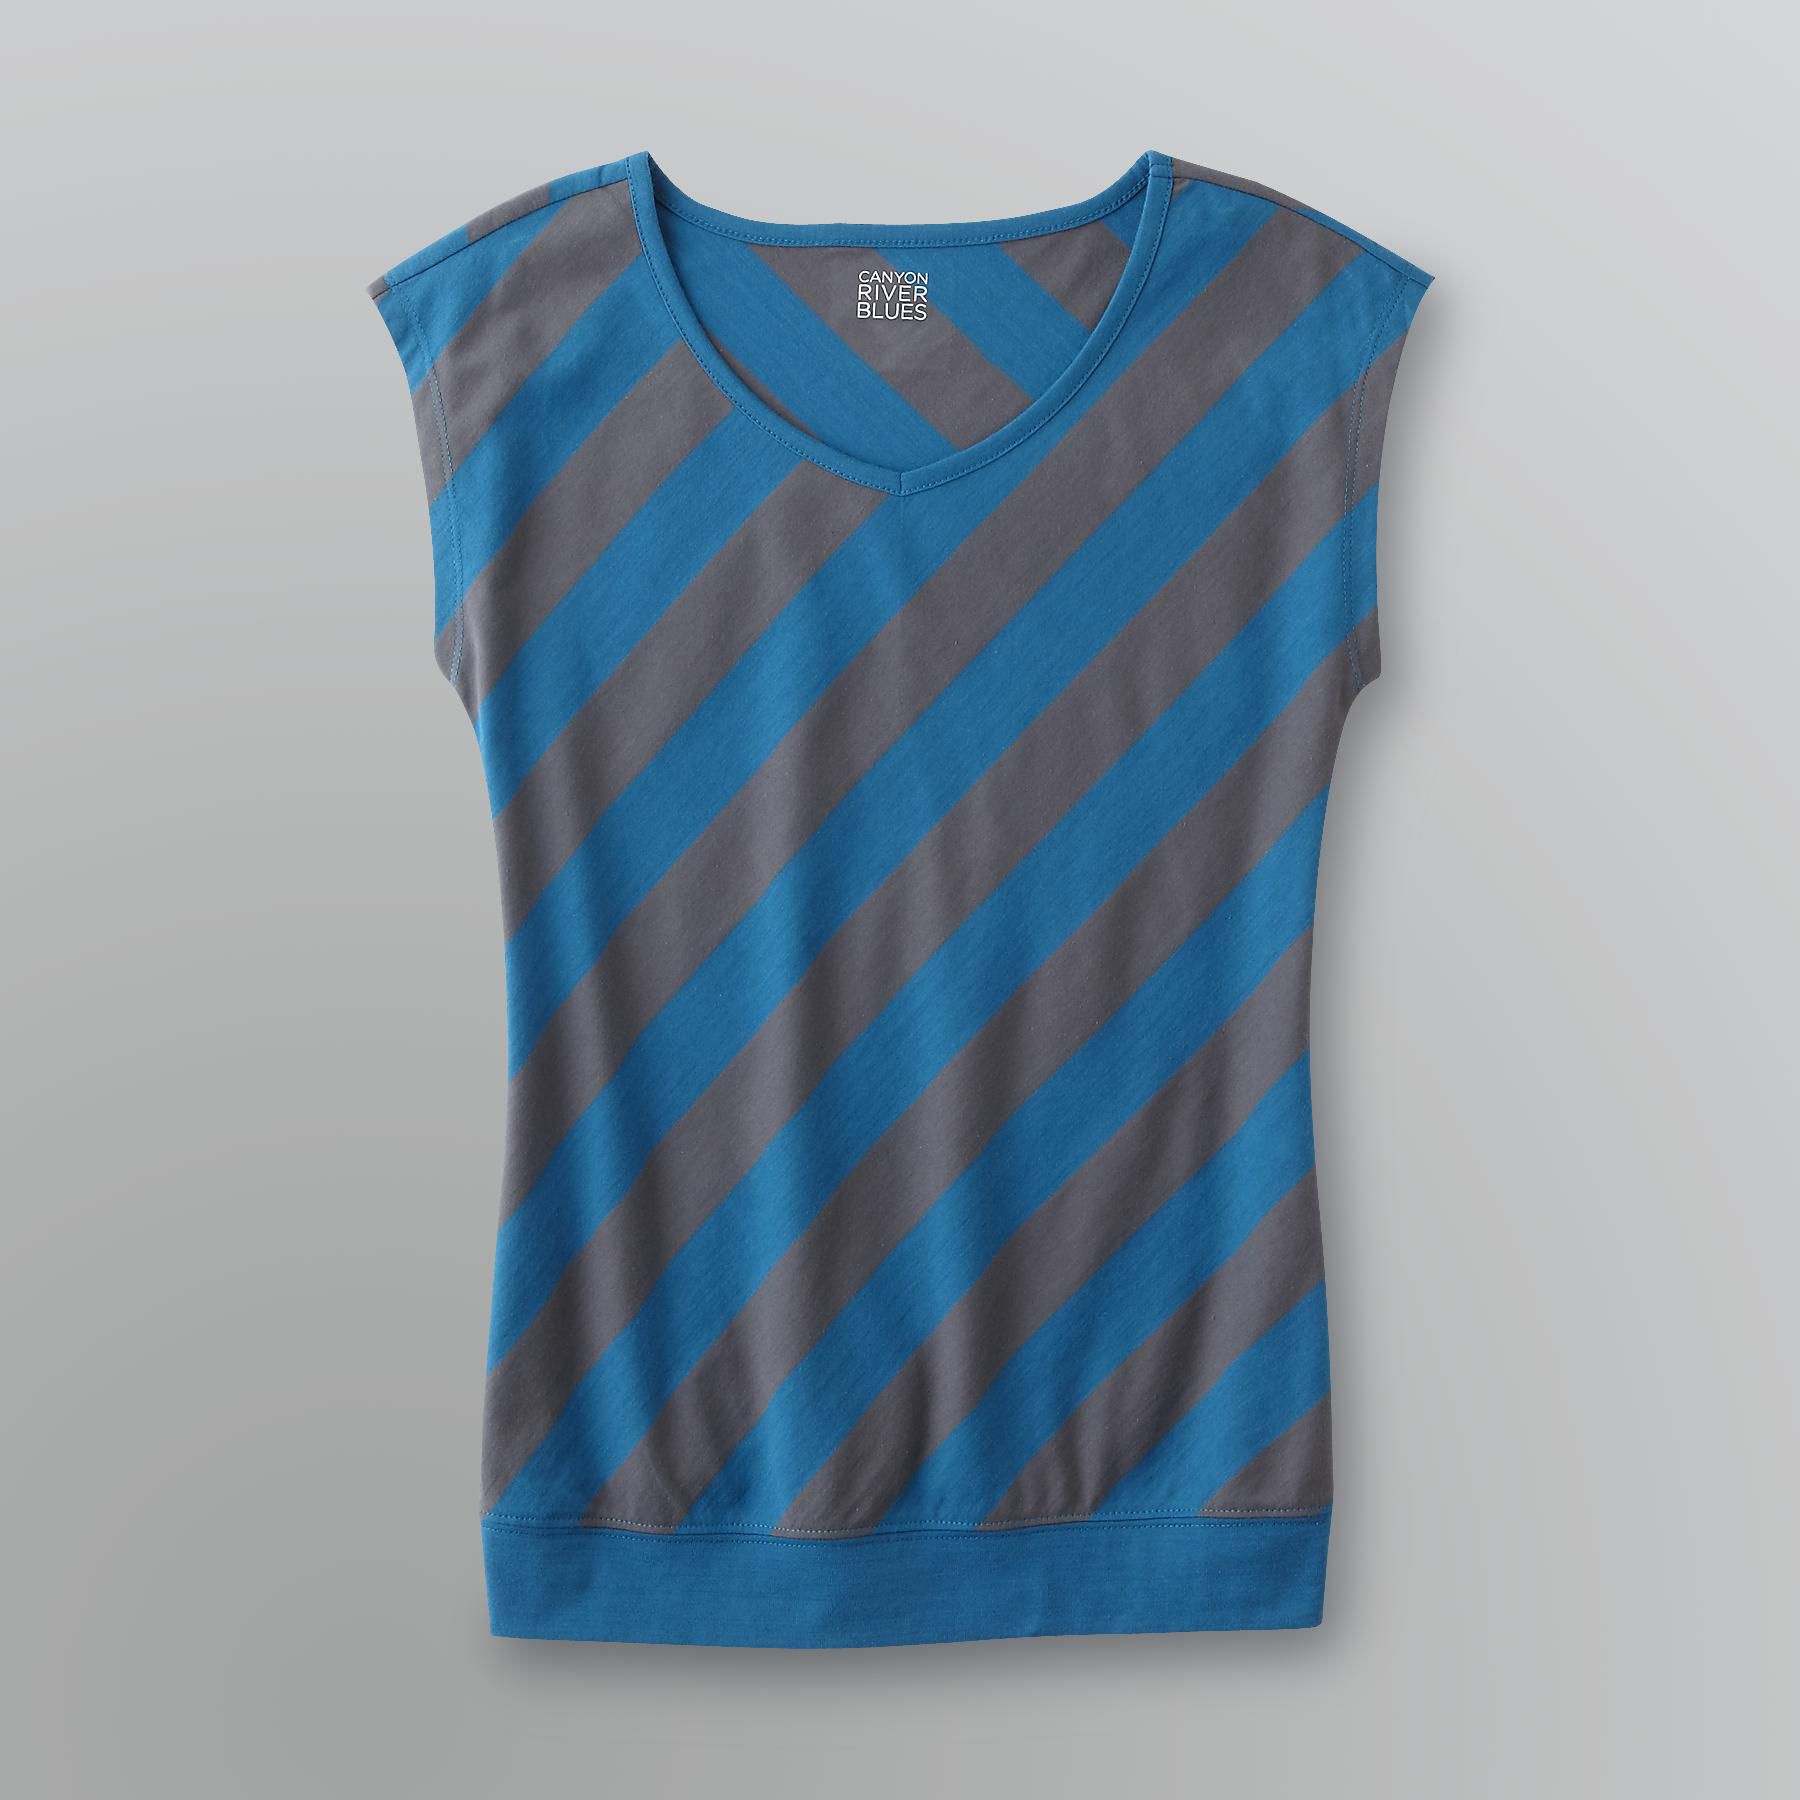 Canyon River Blues Girl's Striped V-Neck T-Shirt